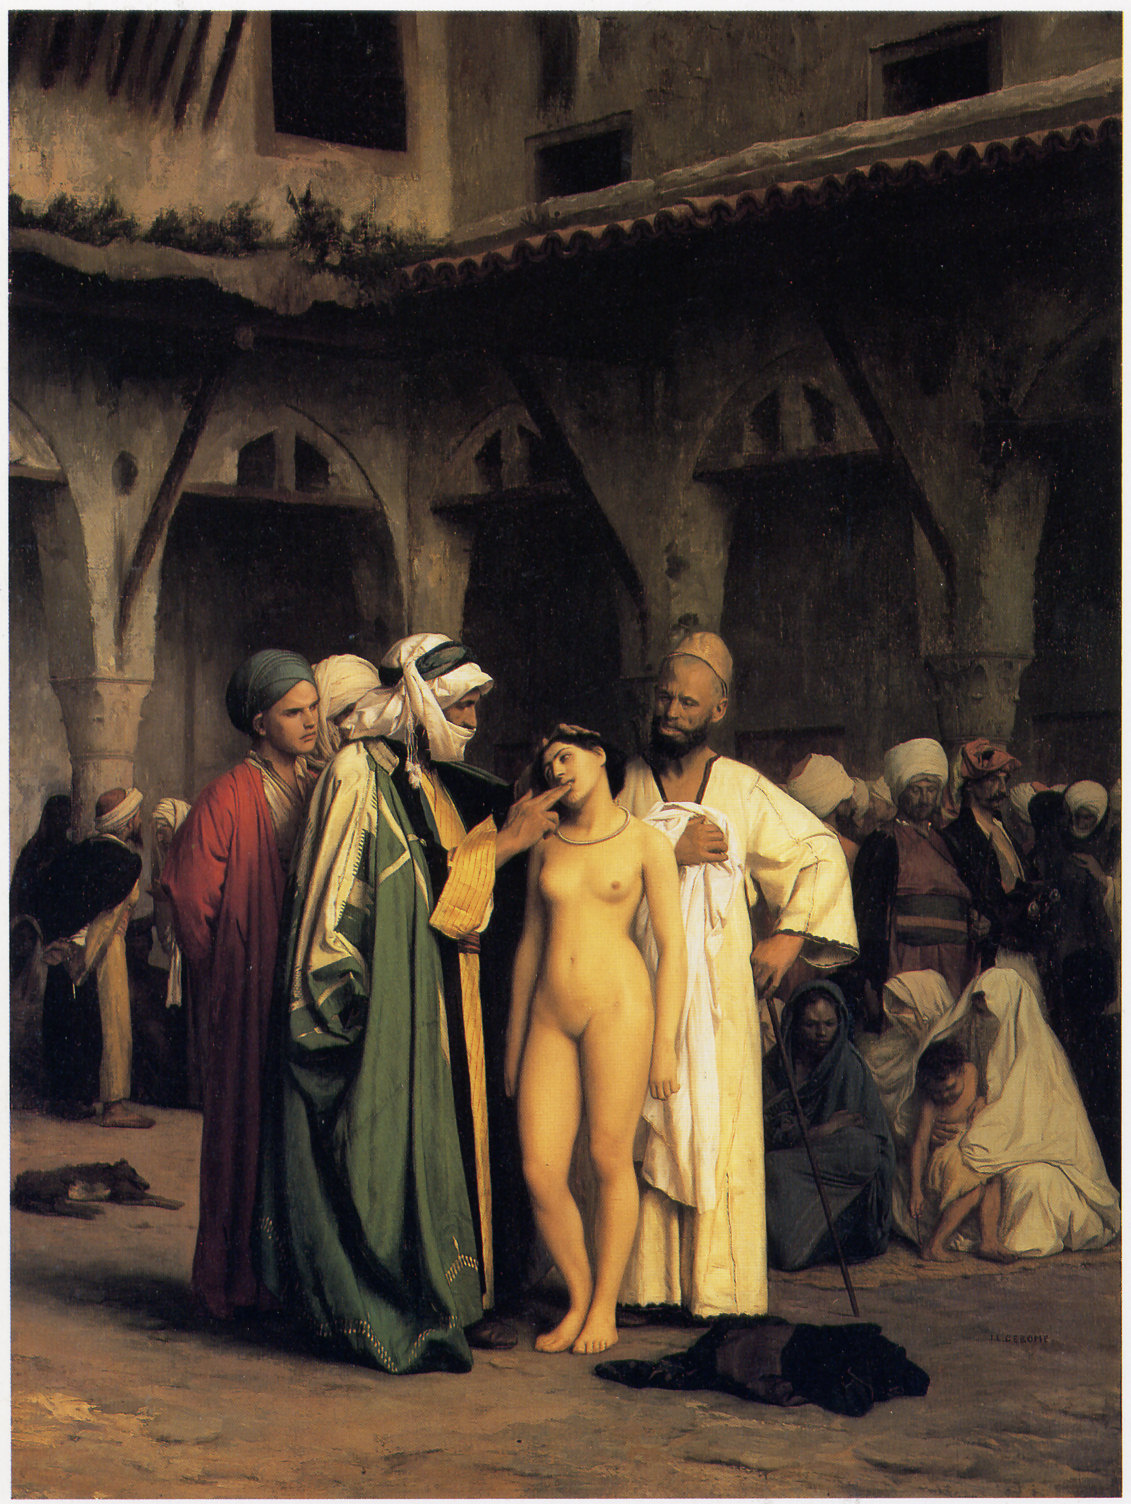 El mercado de esclavos. Jean-Léon Gérôme. Óleo sobre lienzo, 1866